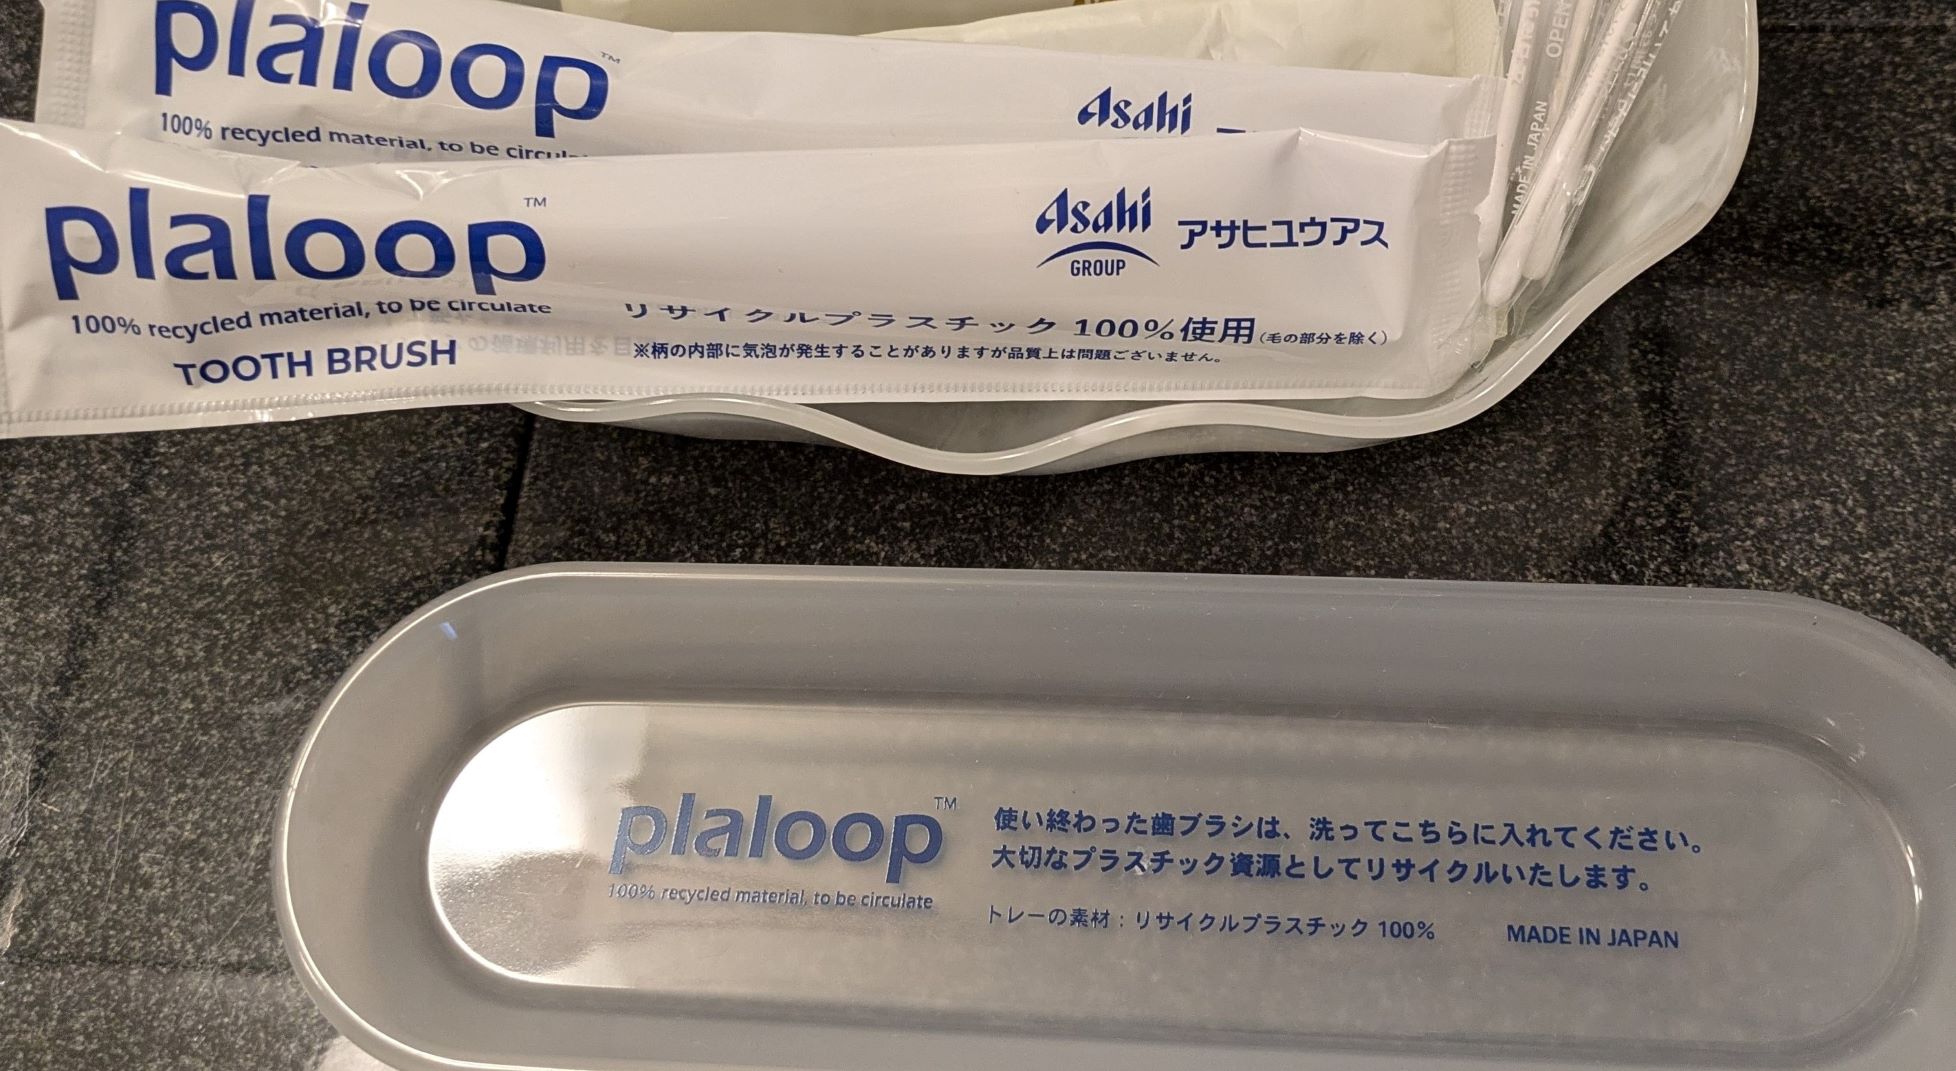 plaloopプロジェクト -ホテルアメニティリサイクルの取組み-